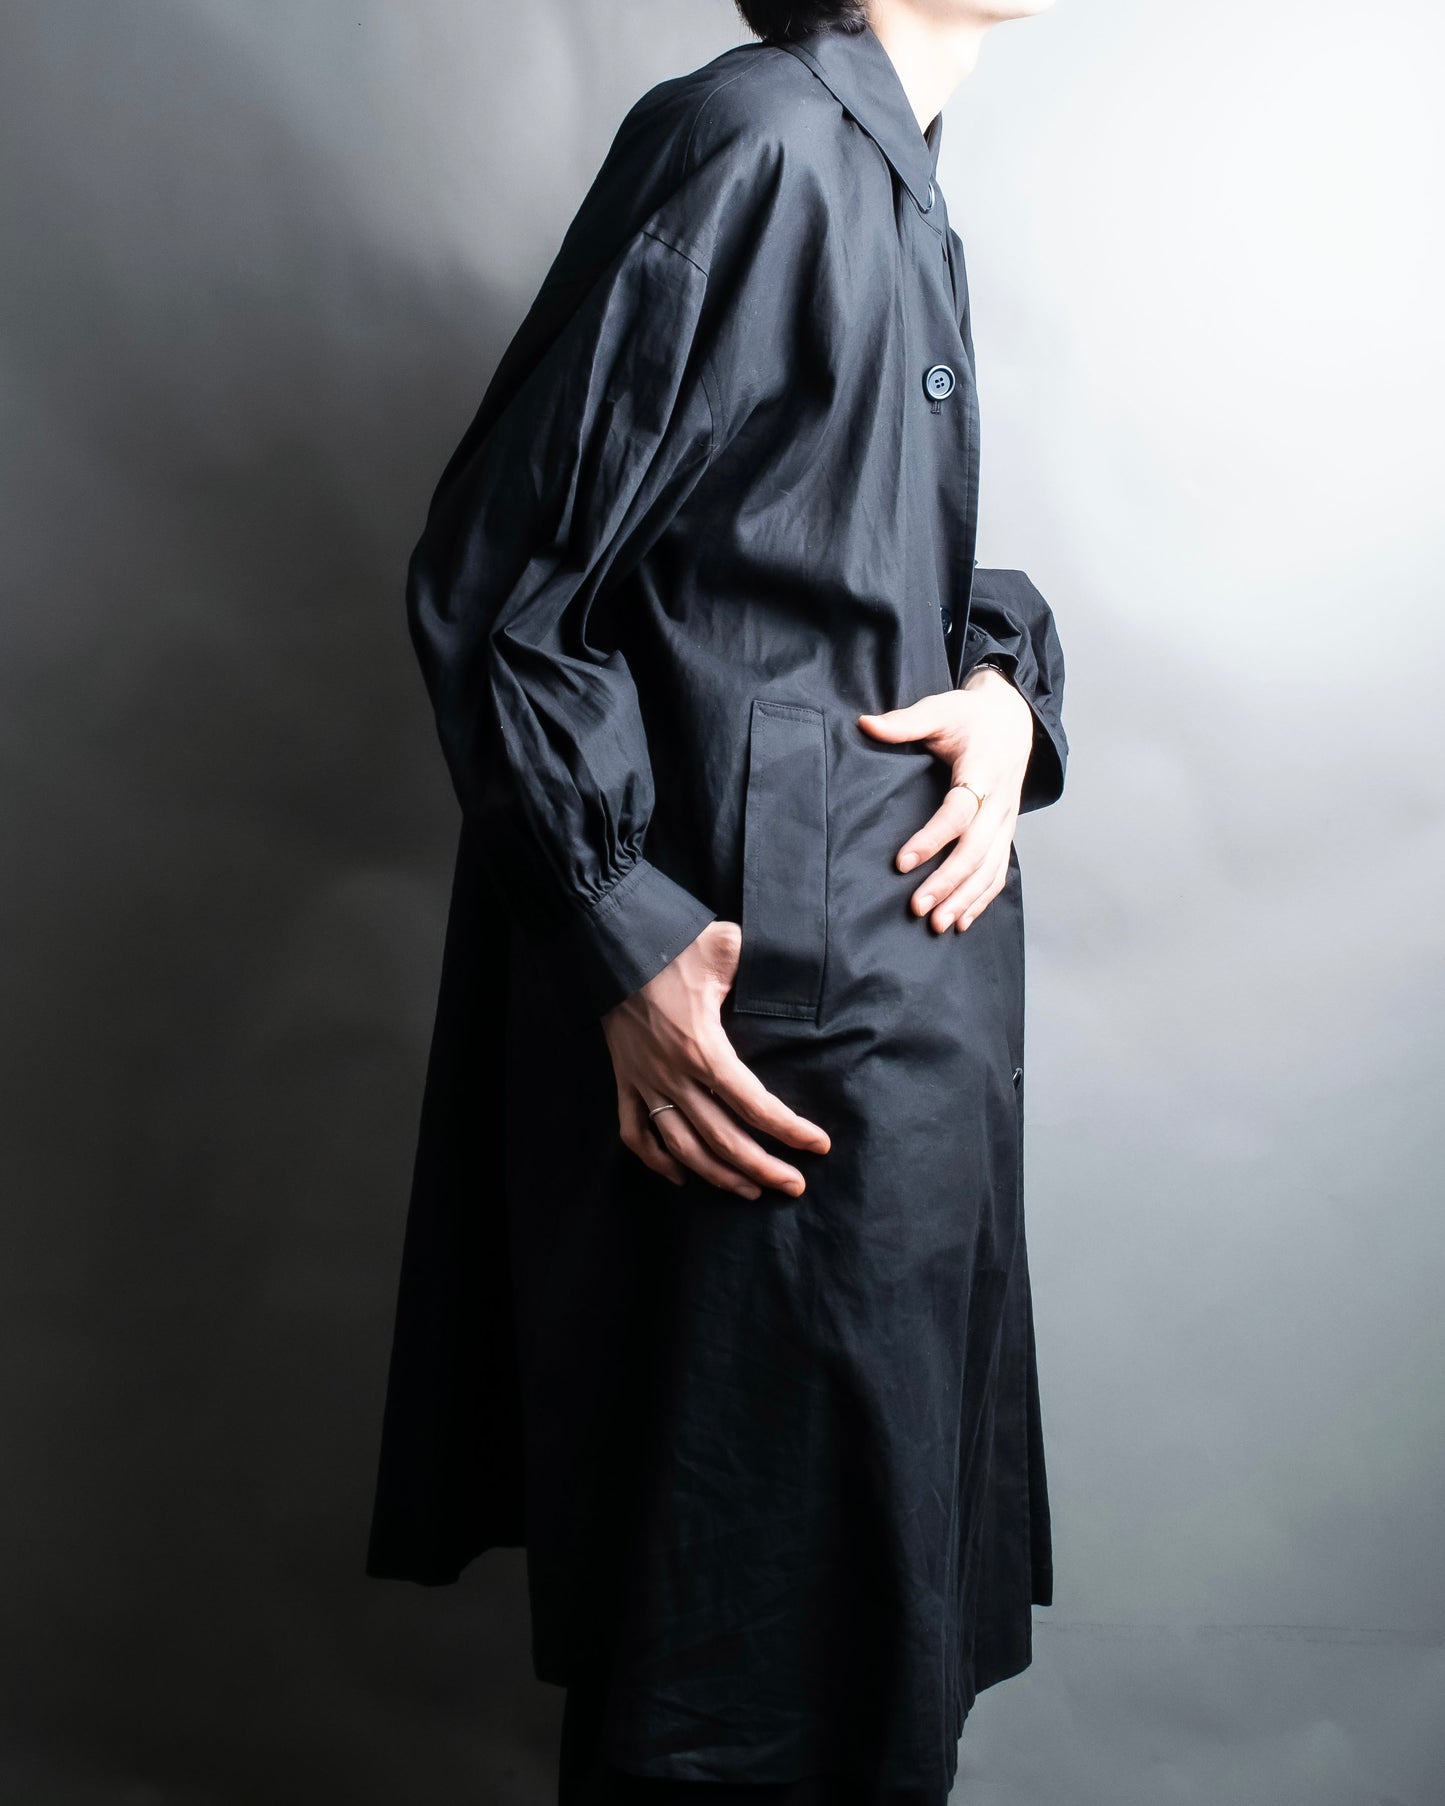 "YVES SAINT LAURENT" Black mode style shirt coat